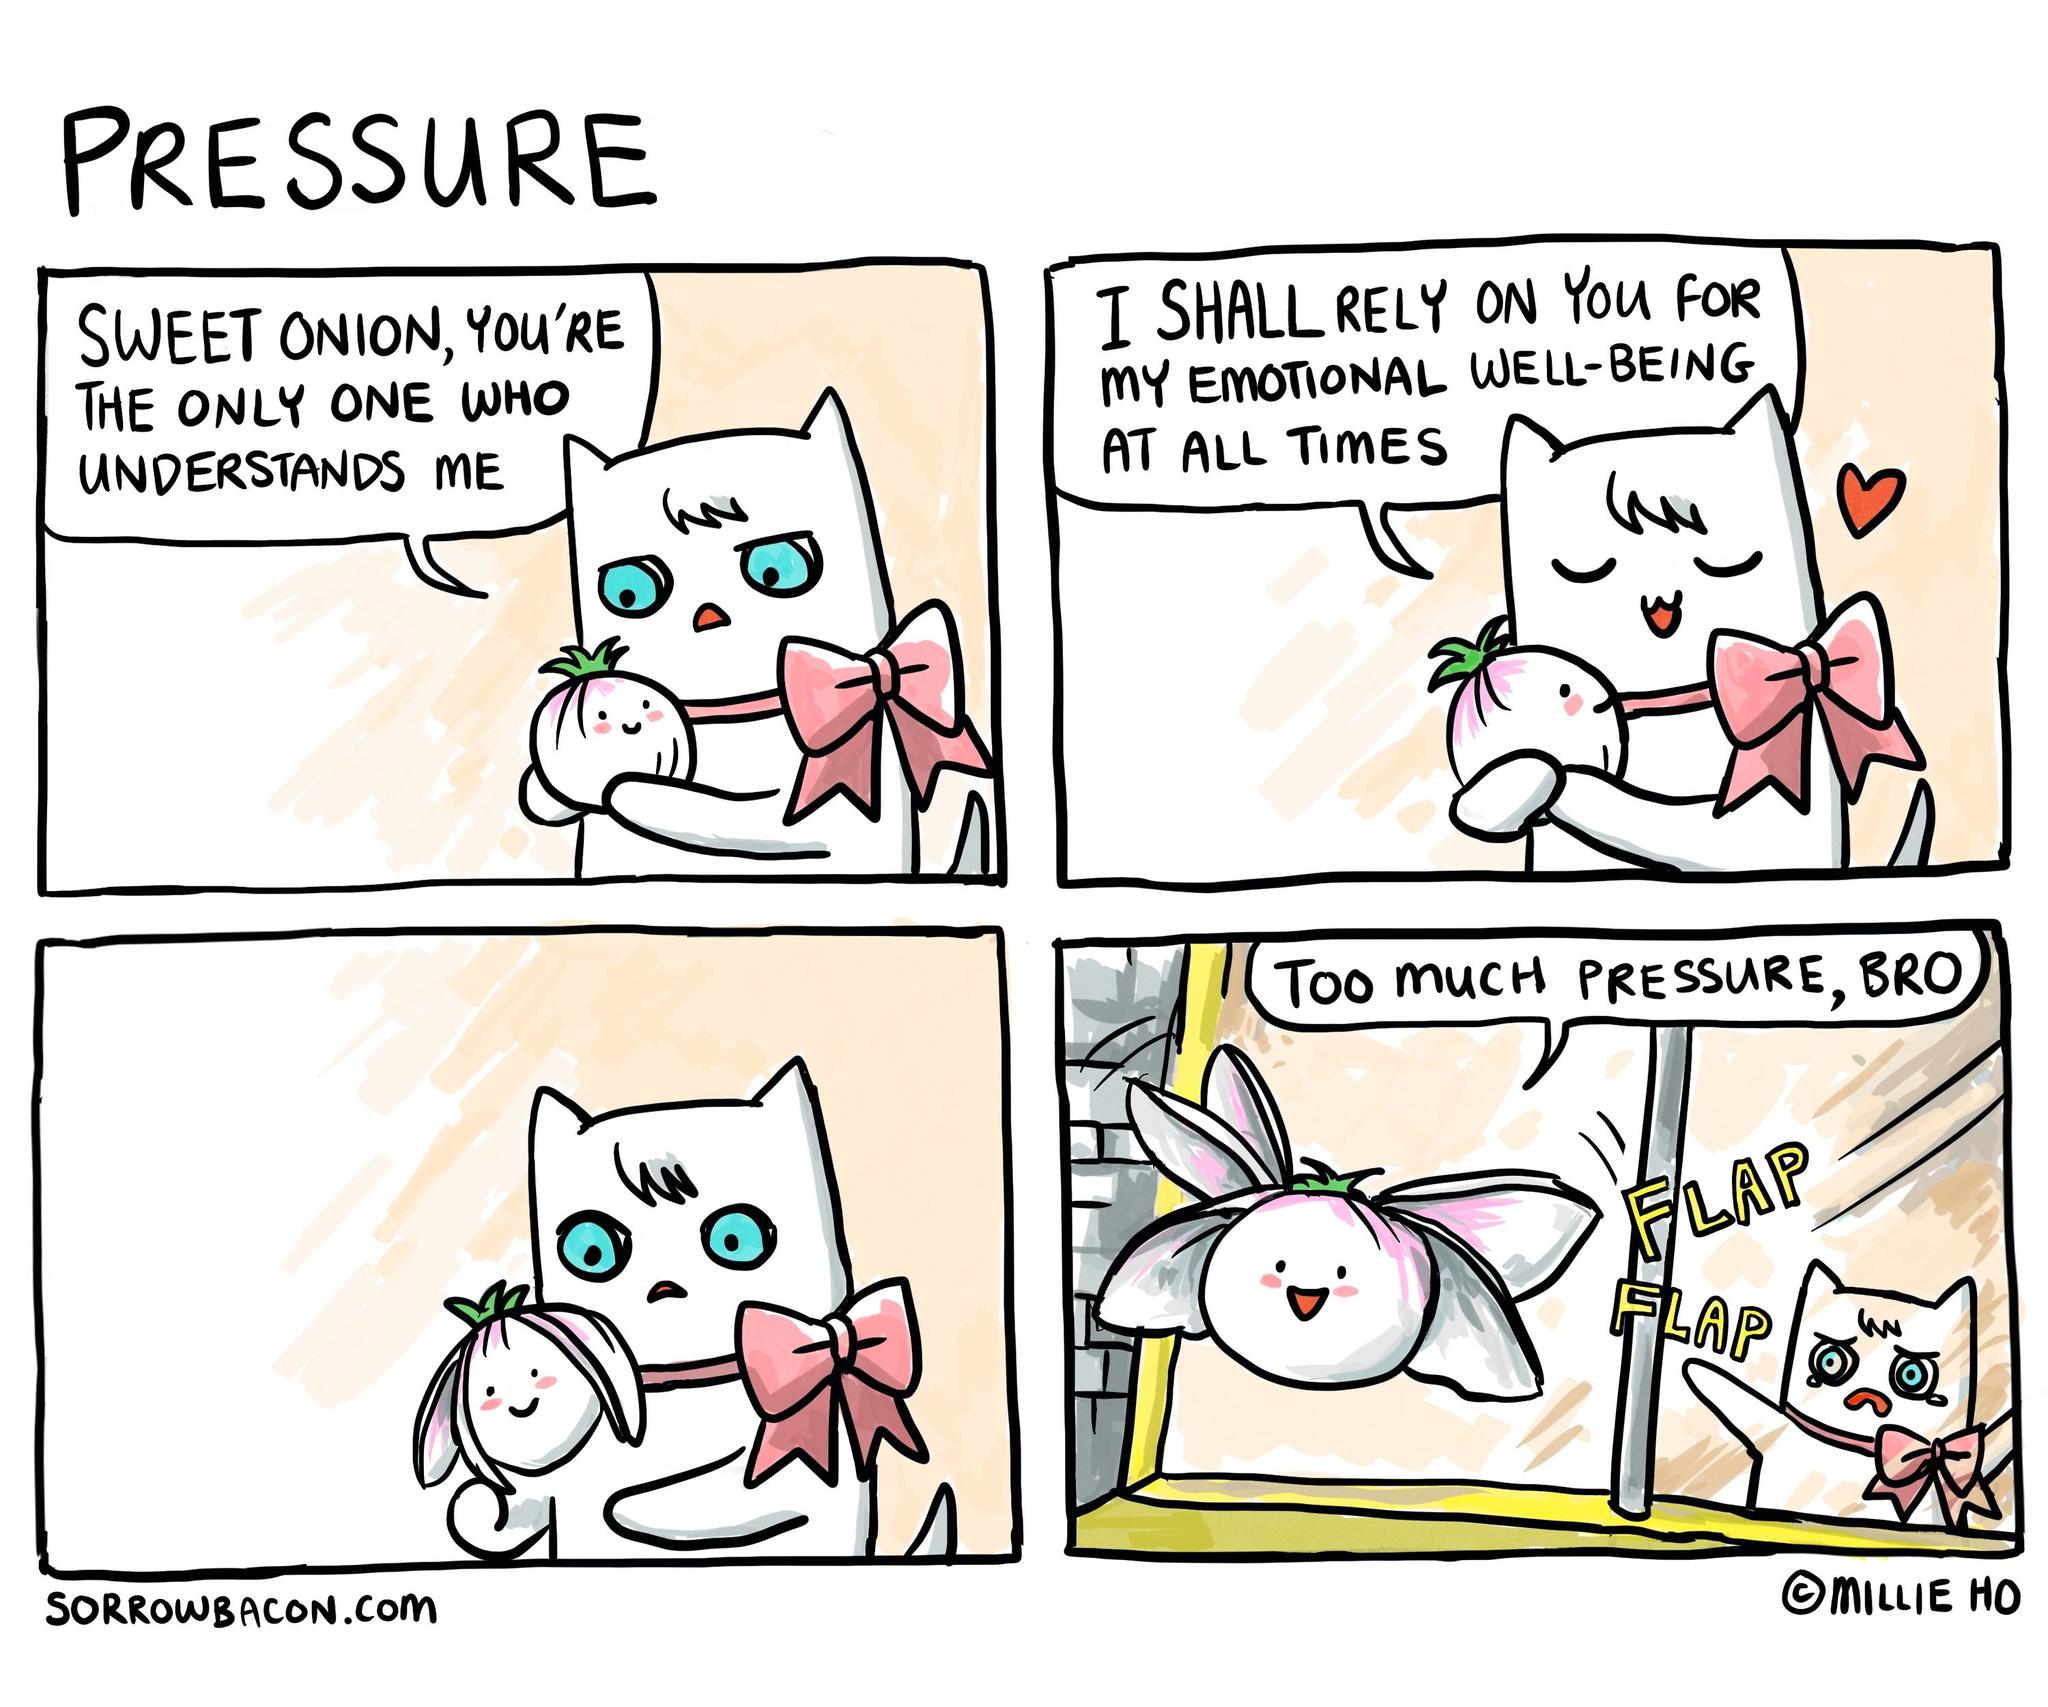 Pressure sorrowbacon comic